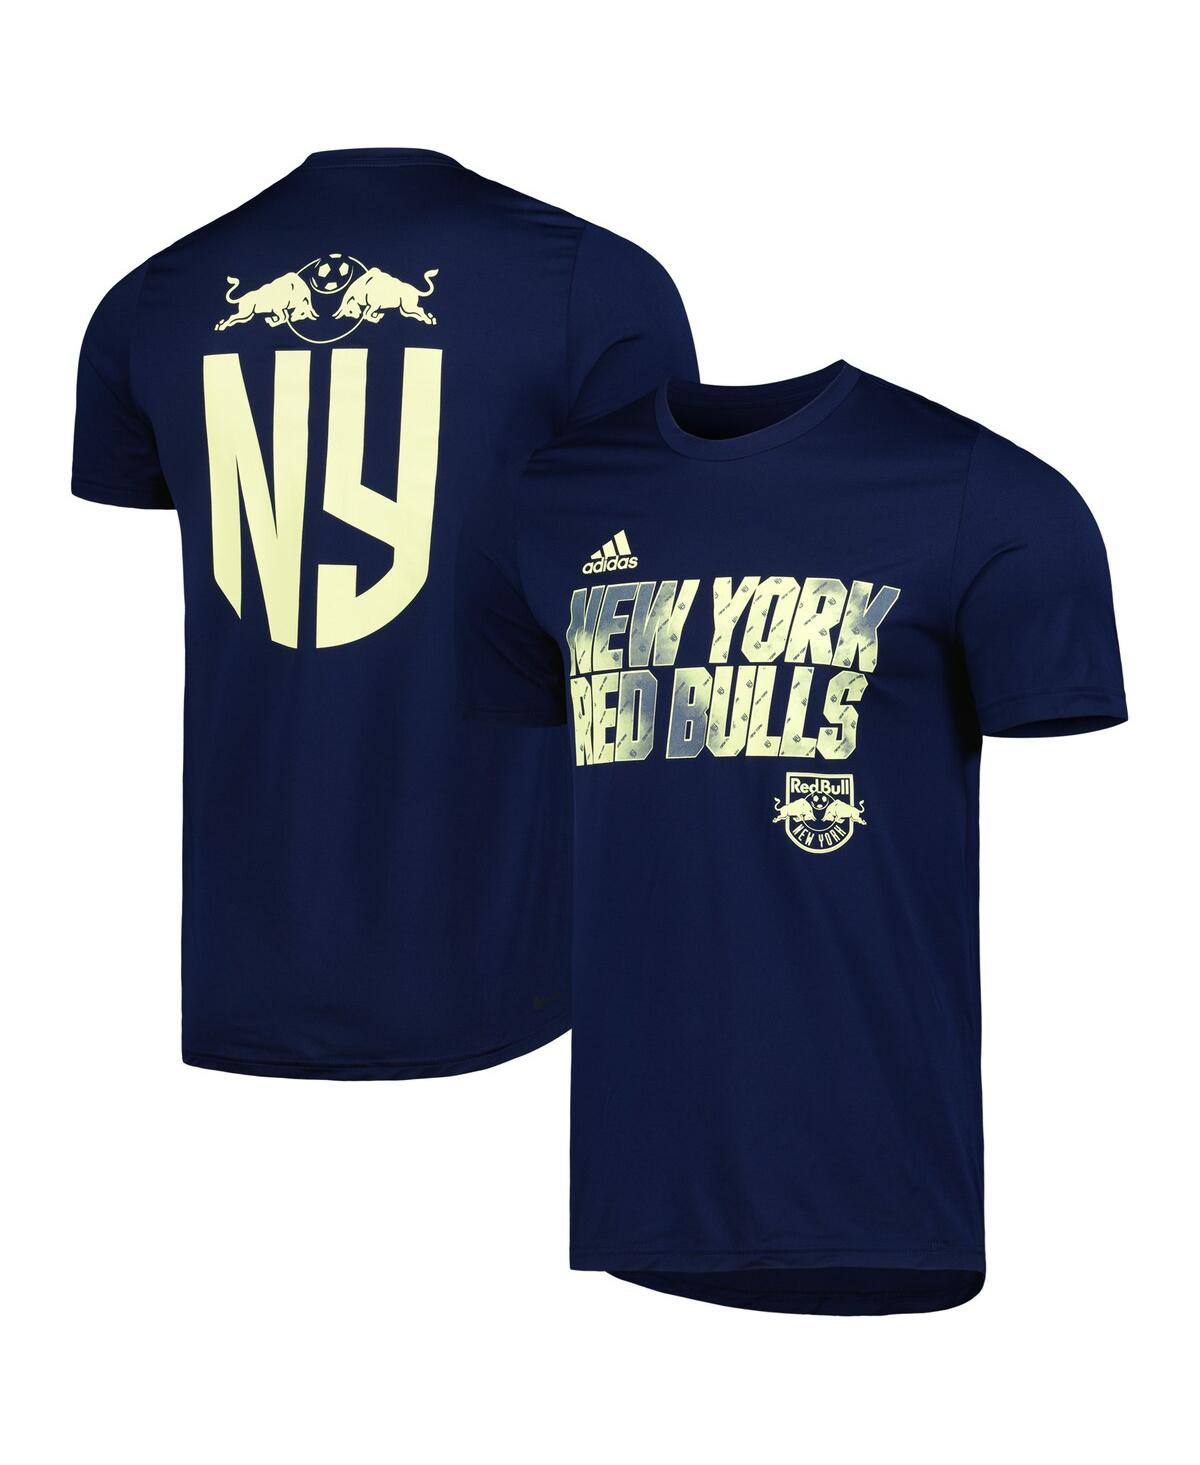 Shop Adidas Originals Men's Adidas Navy New York Red Bulls Team Jersey Hook T-shirt